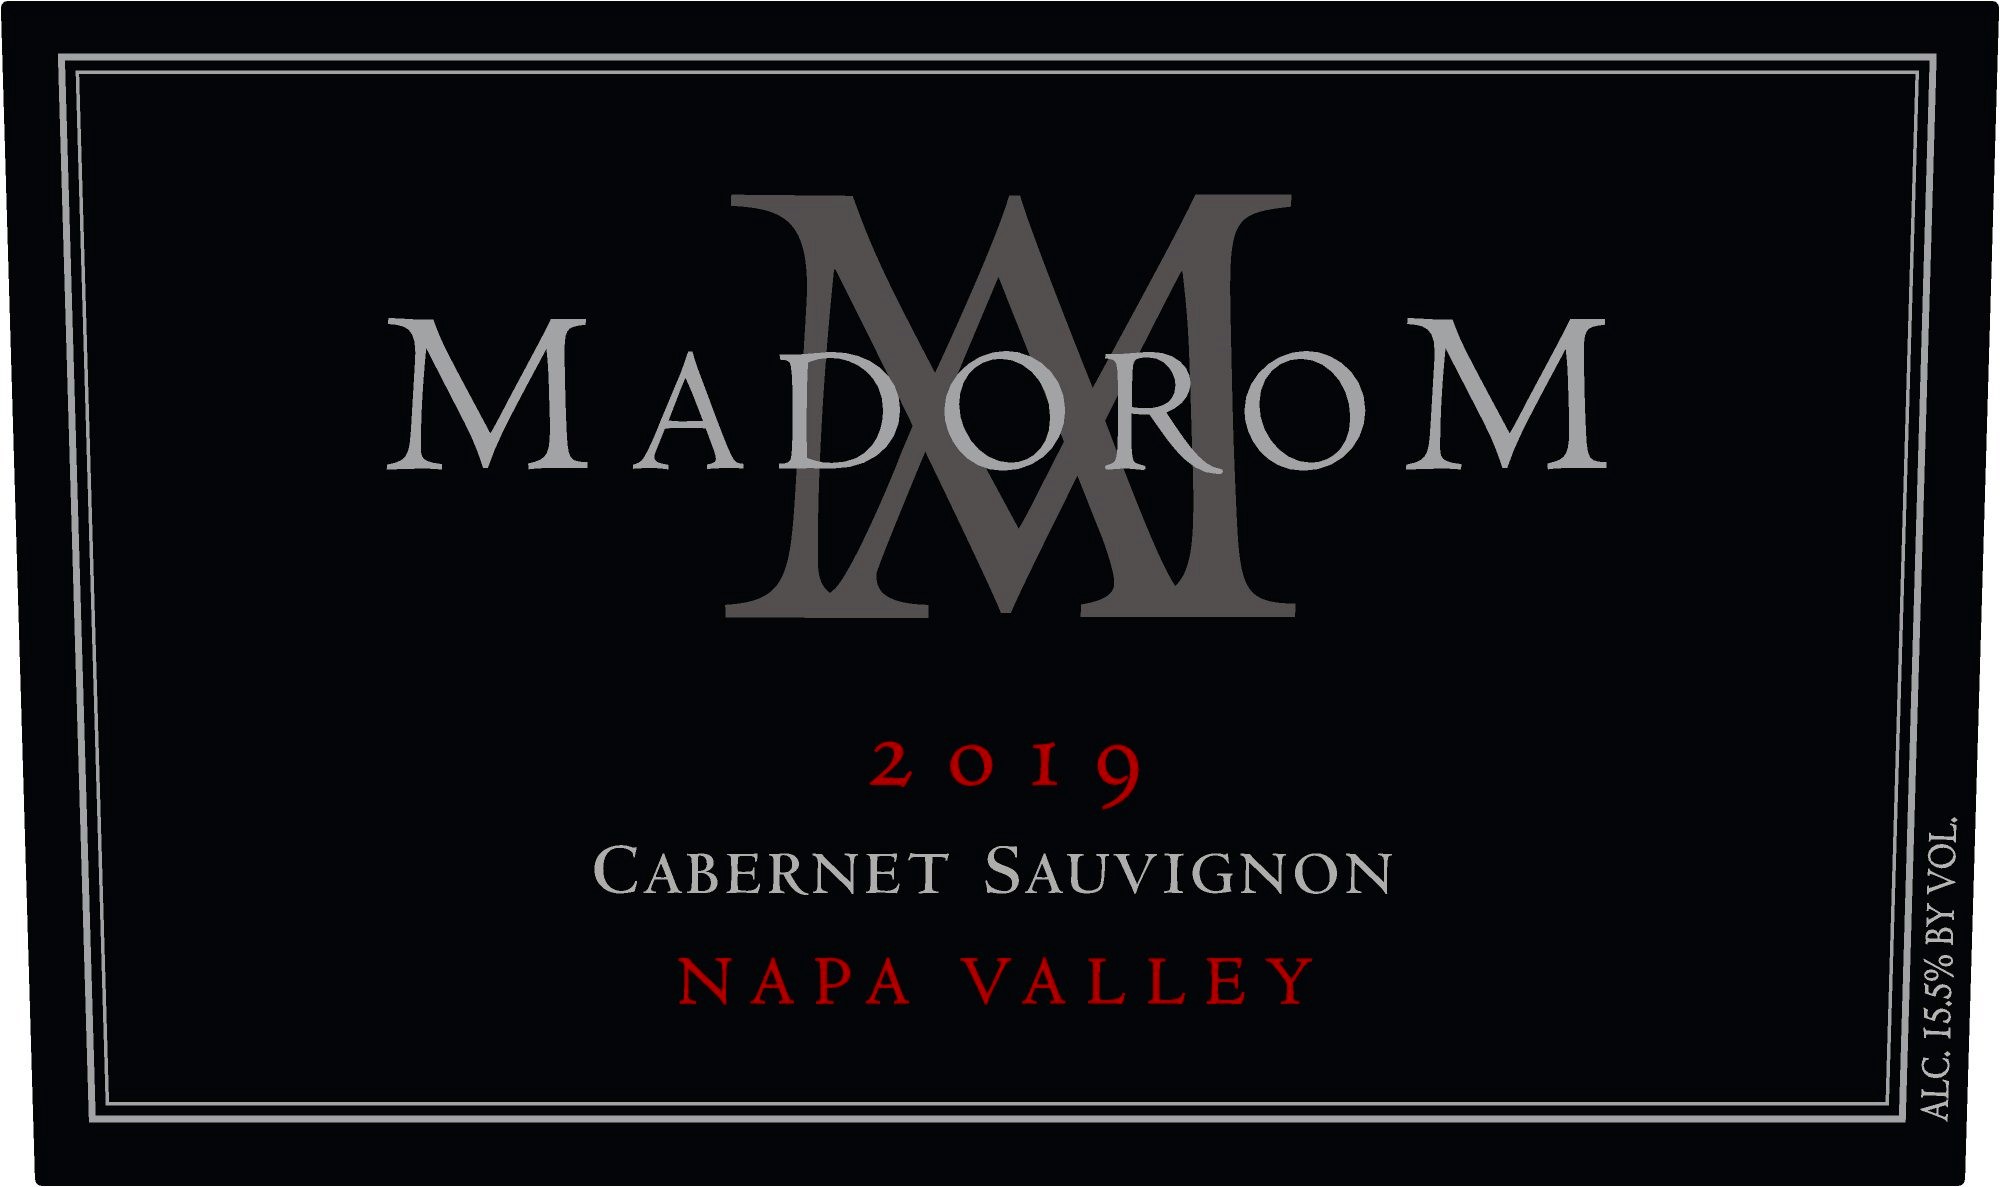 Product Image for 2019 MadoroM Napa Valley Cabernet Sauvignon 1.5L